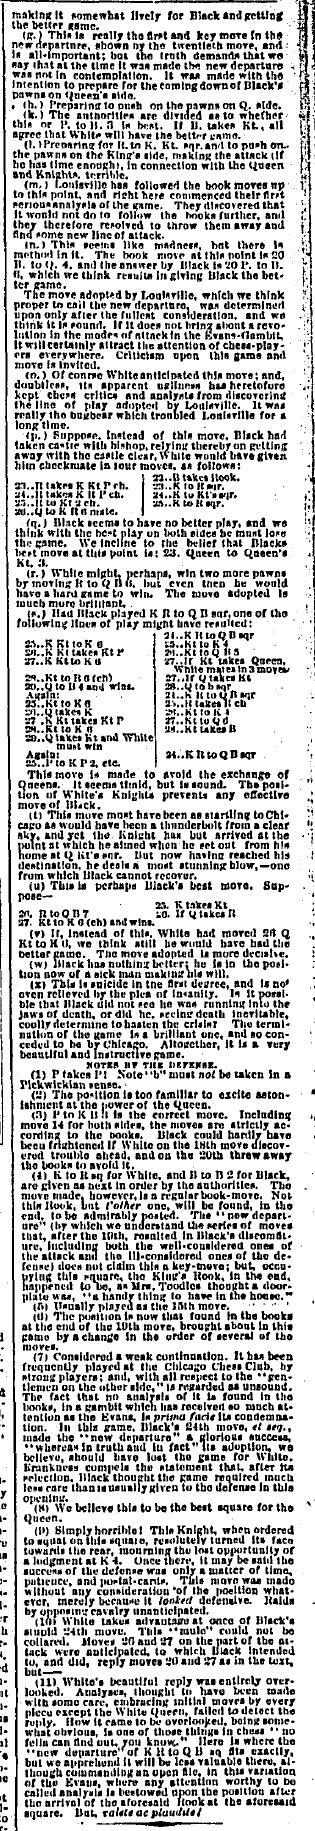 1877.06.24-02 Chicago Tribune.jpg